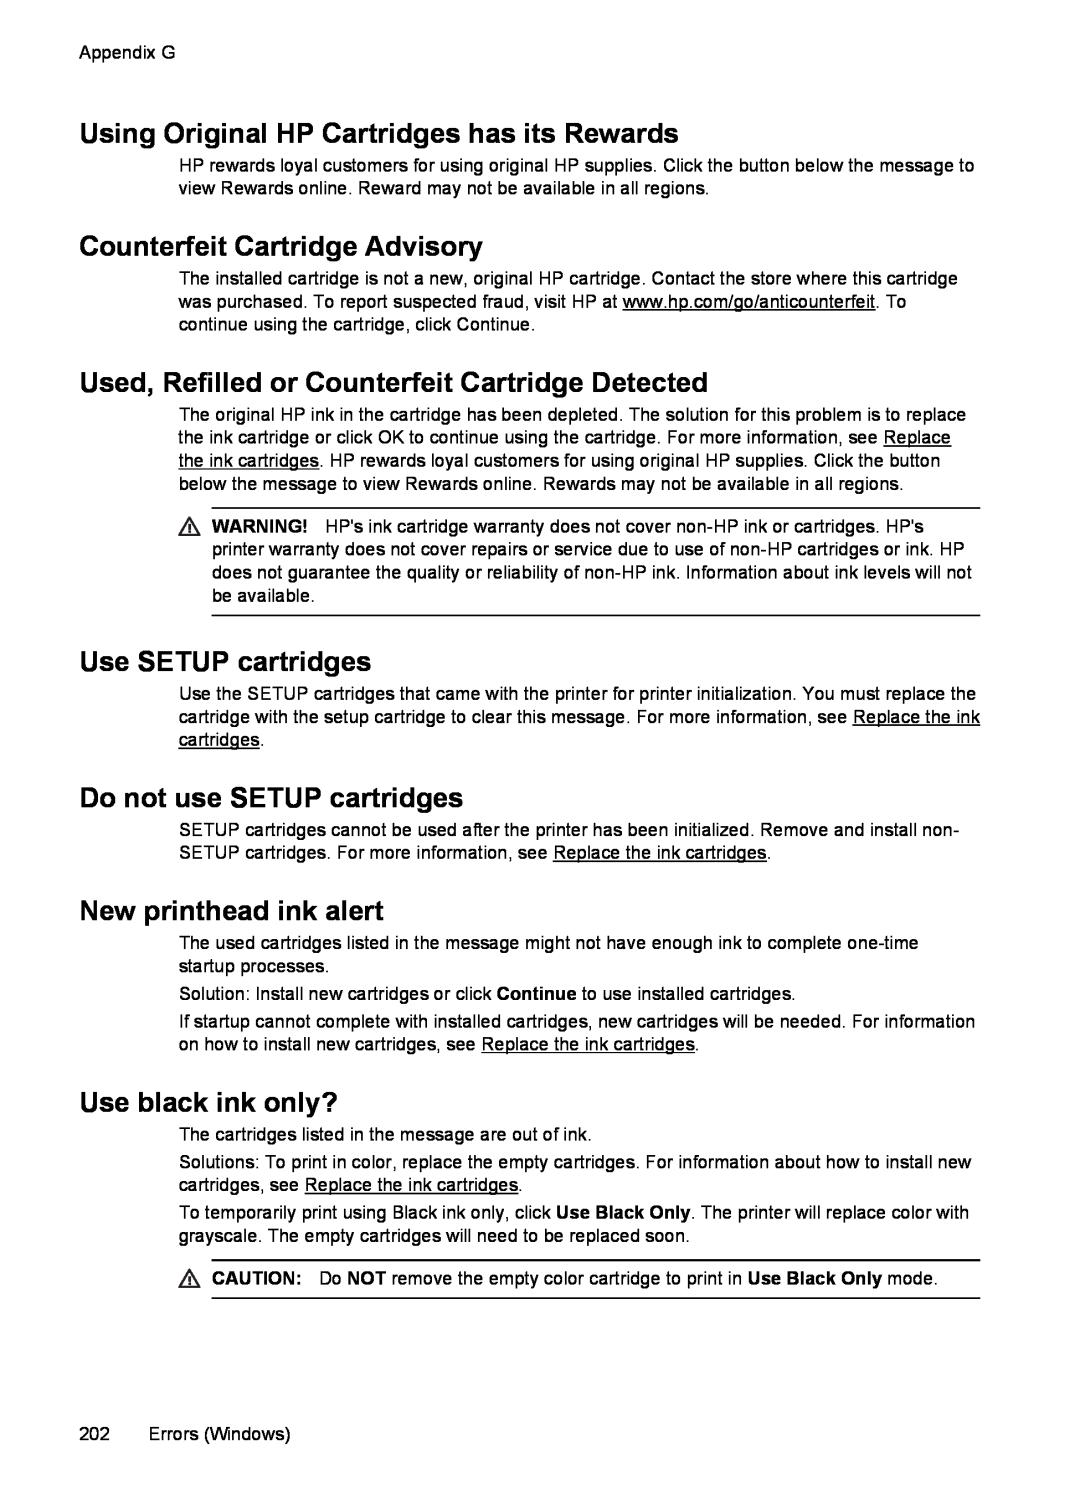 HP 6600 - H7 manual Using Original HP Cartridges has its Rewards, Counterfeit Cartridge Advisory, Use SETUP cartridges 